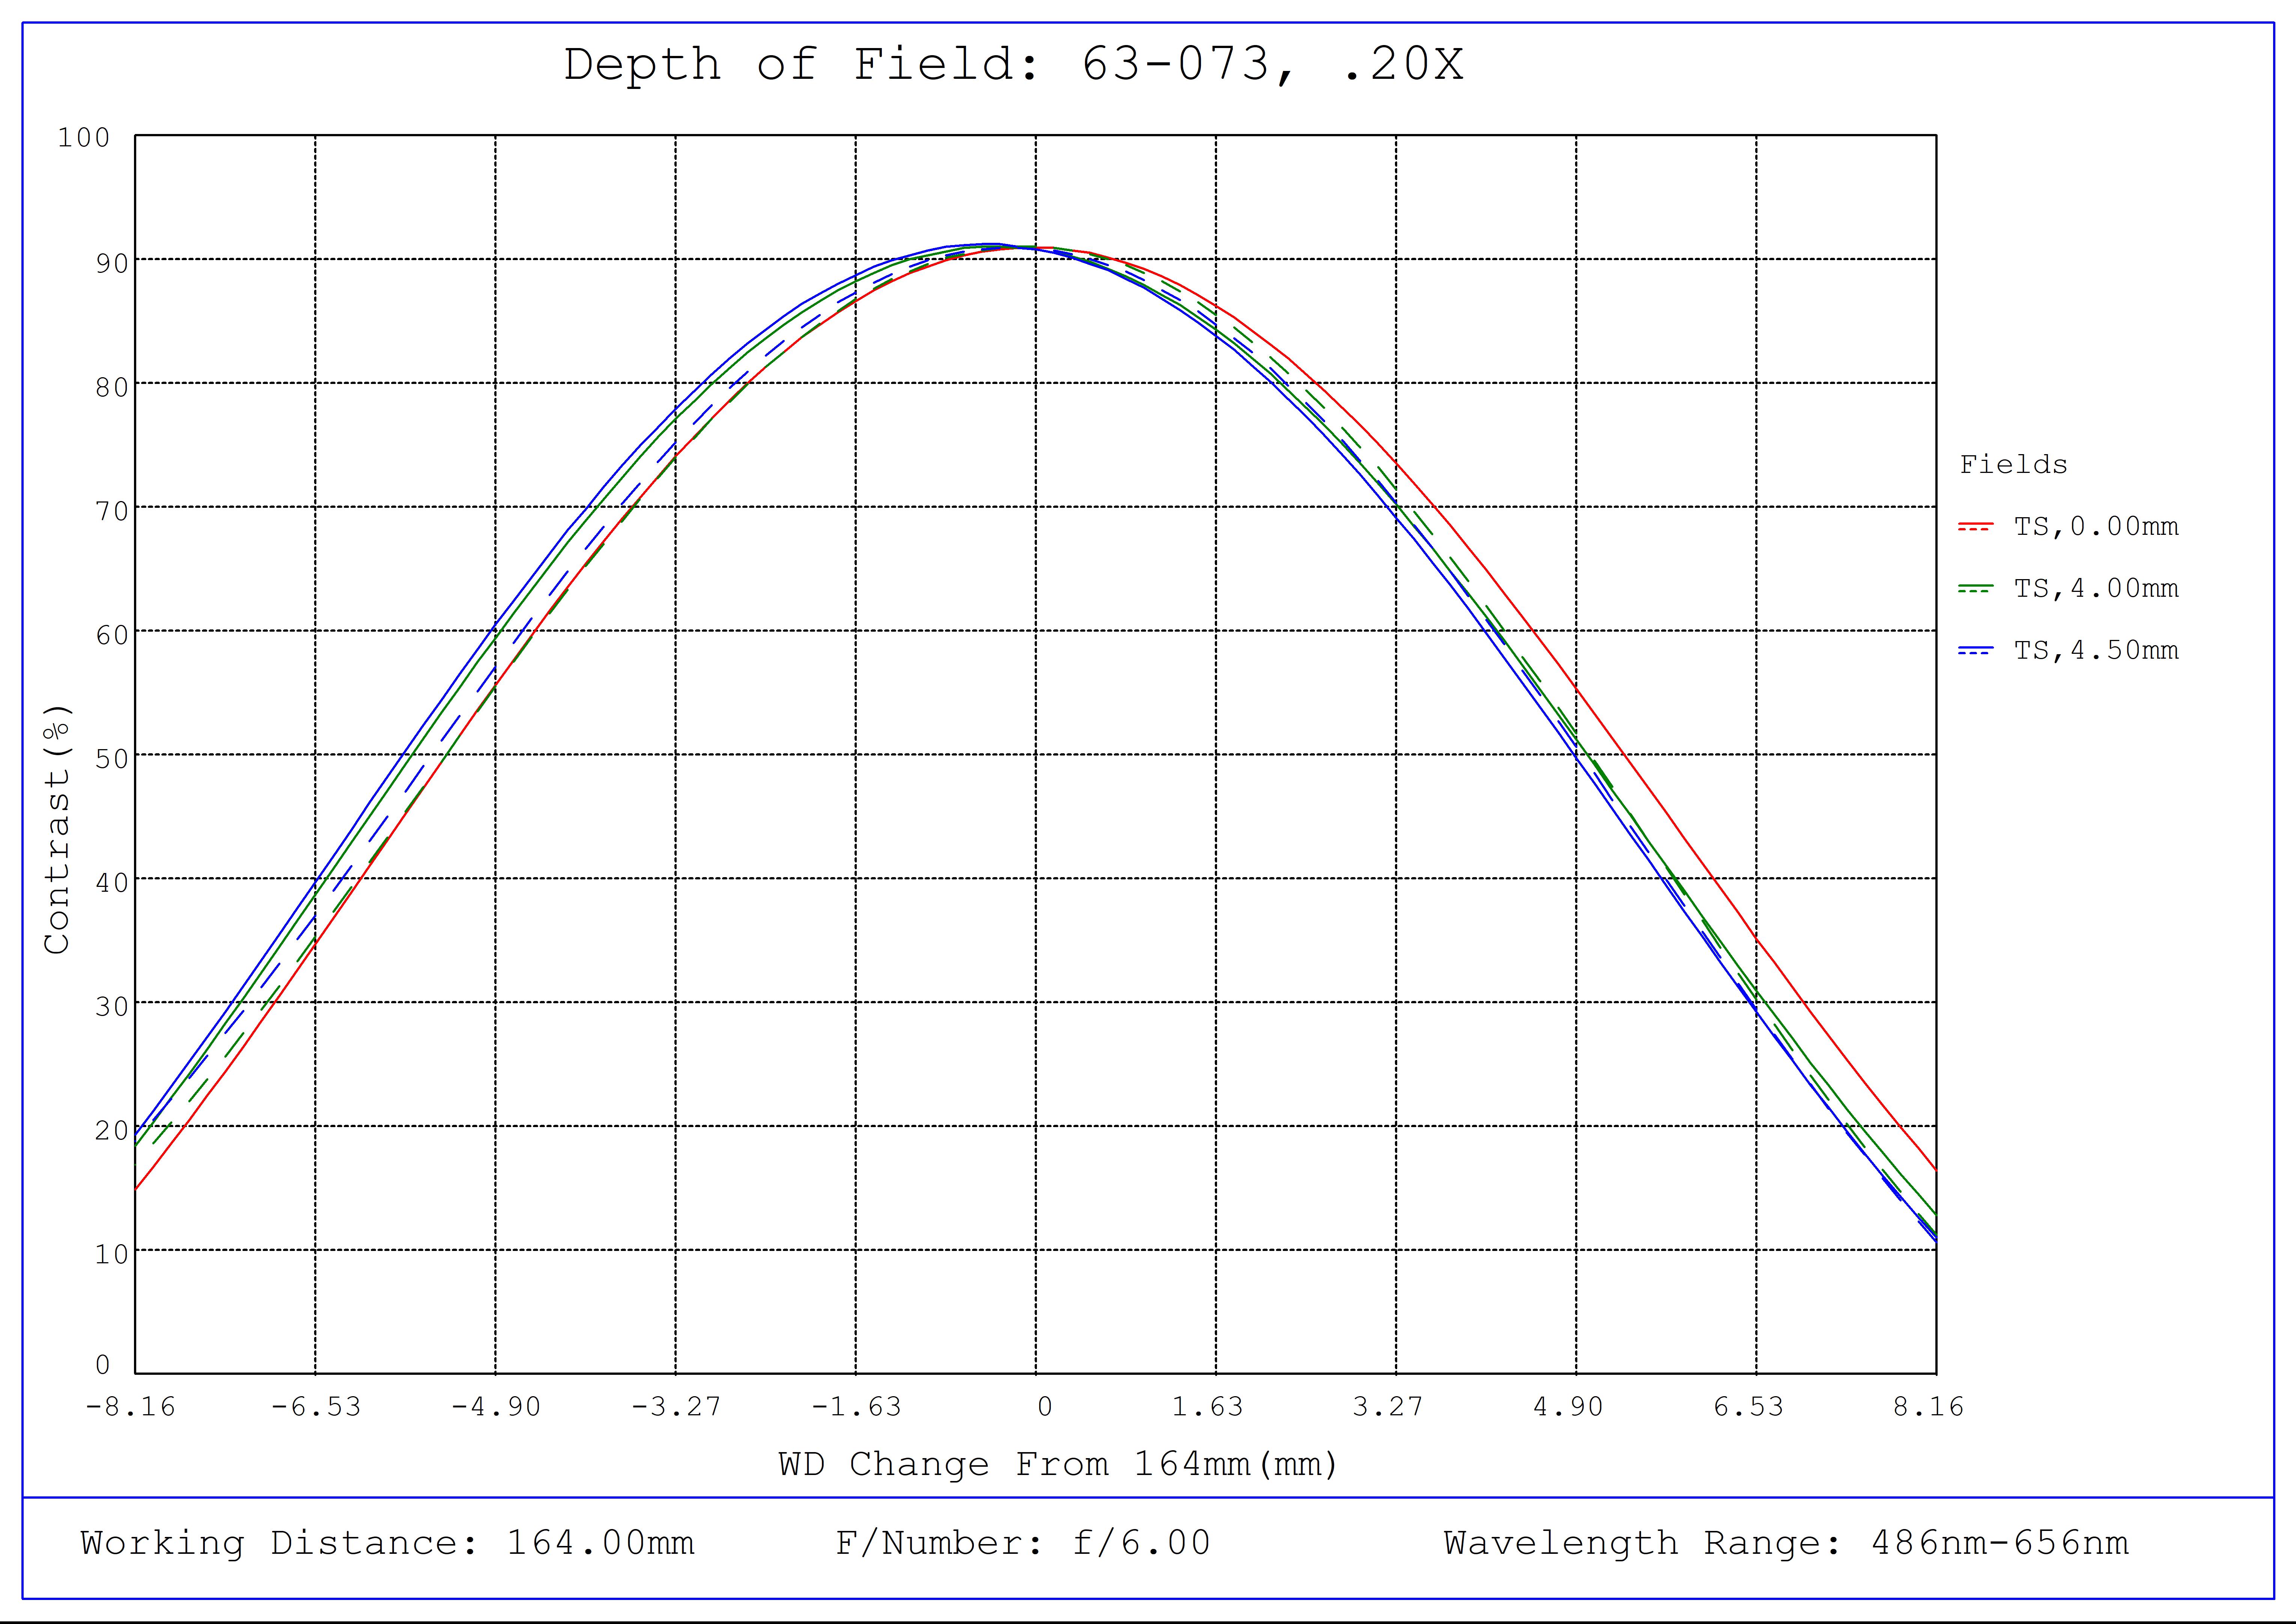 #63-073, 0.20X SilverTL™ Telecentric Lens, Depth of Field Plot, 164mm Working Distance, f6